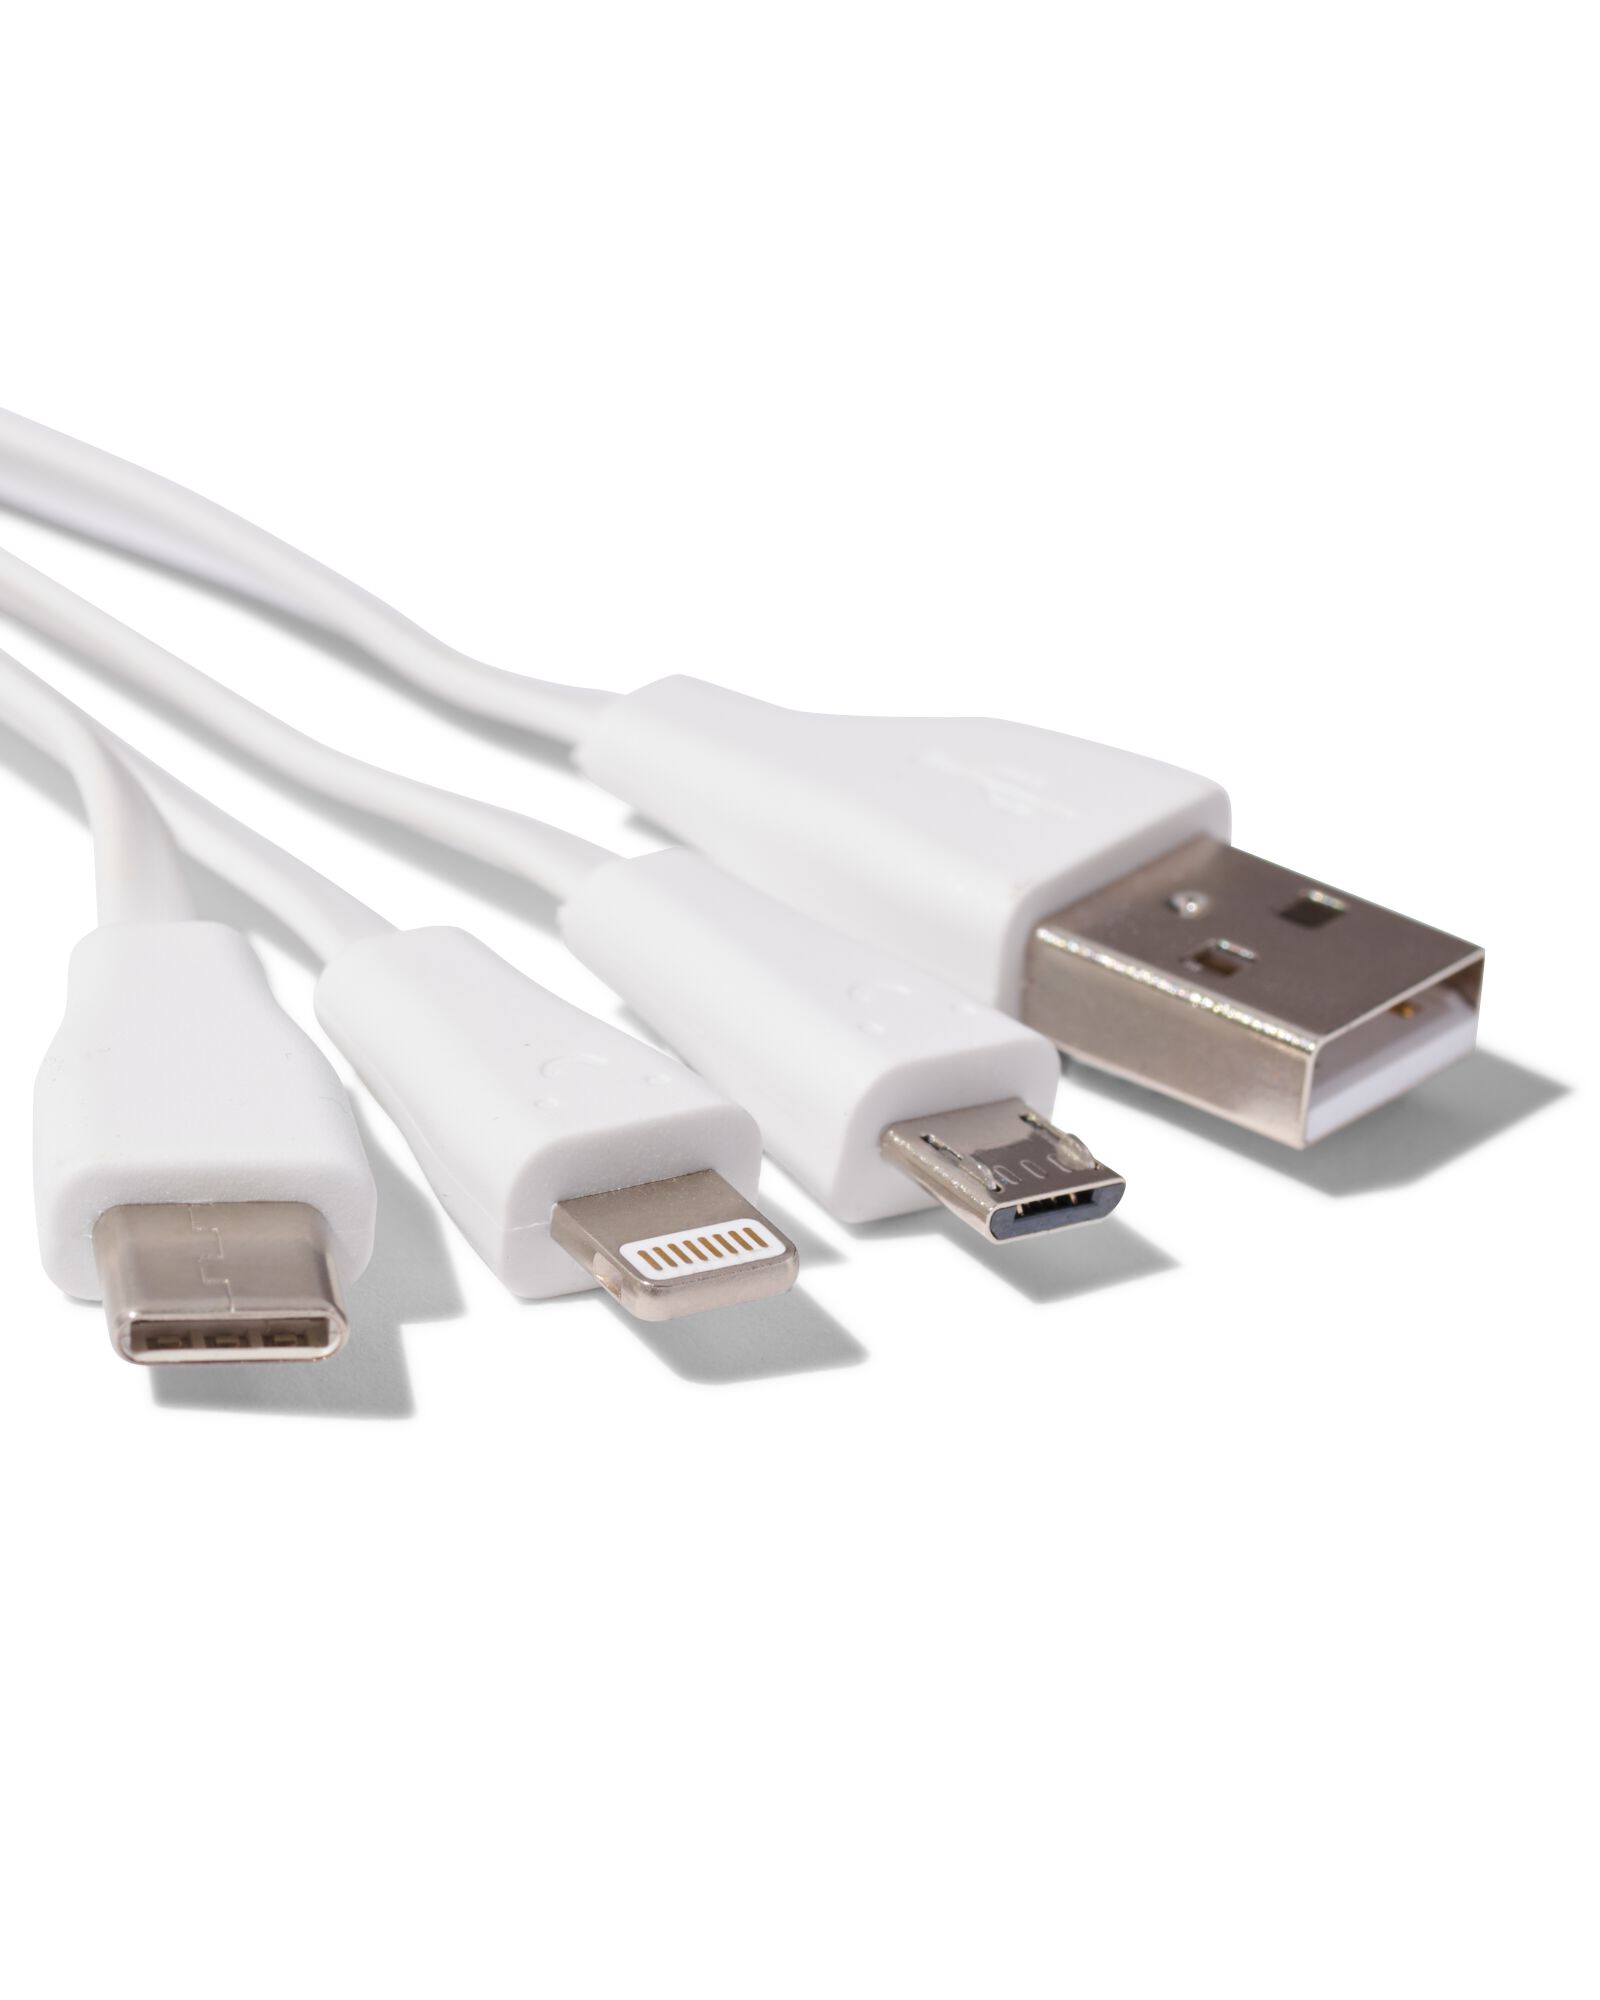 4-in-1 USB laadkabel, USB-C, micro USB & 8 pin - HEMA